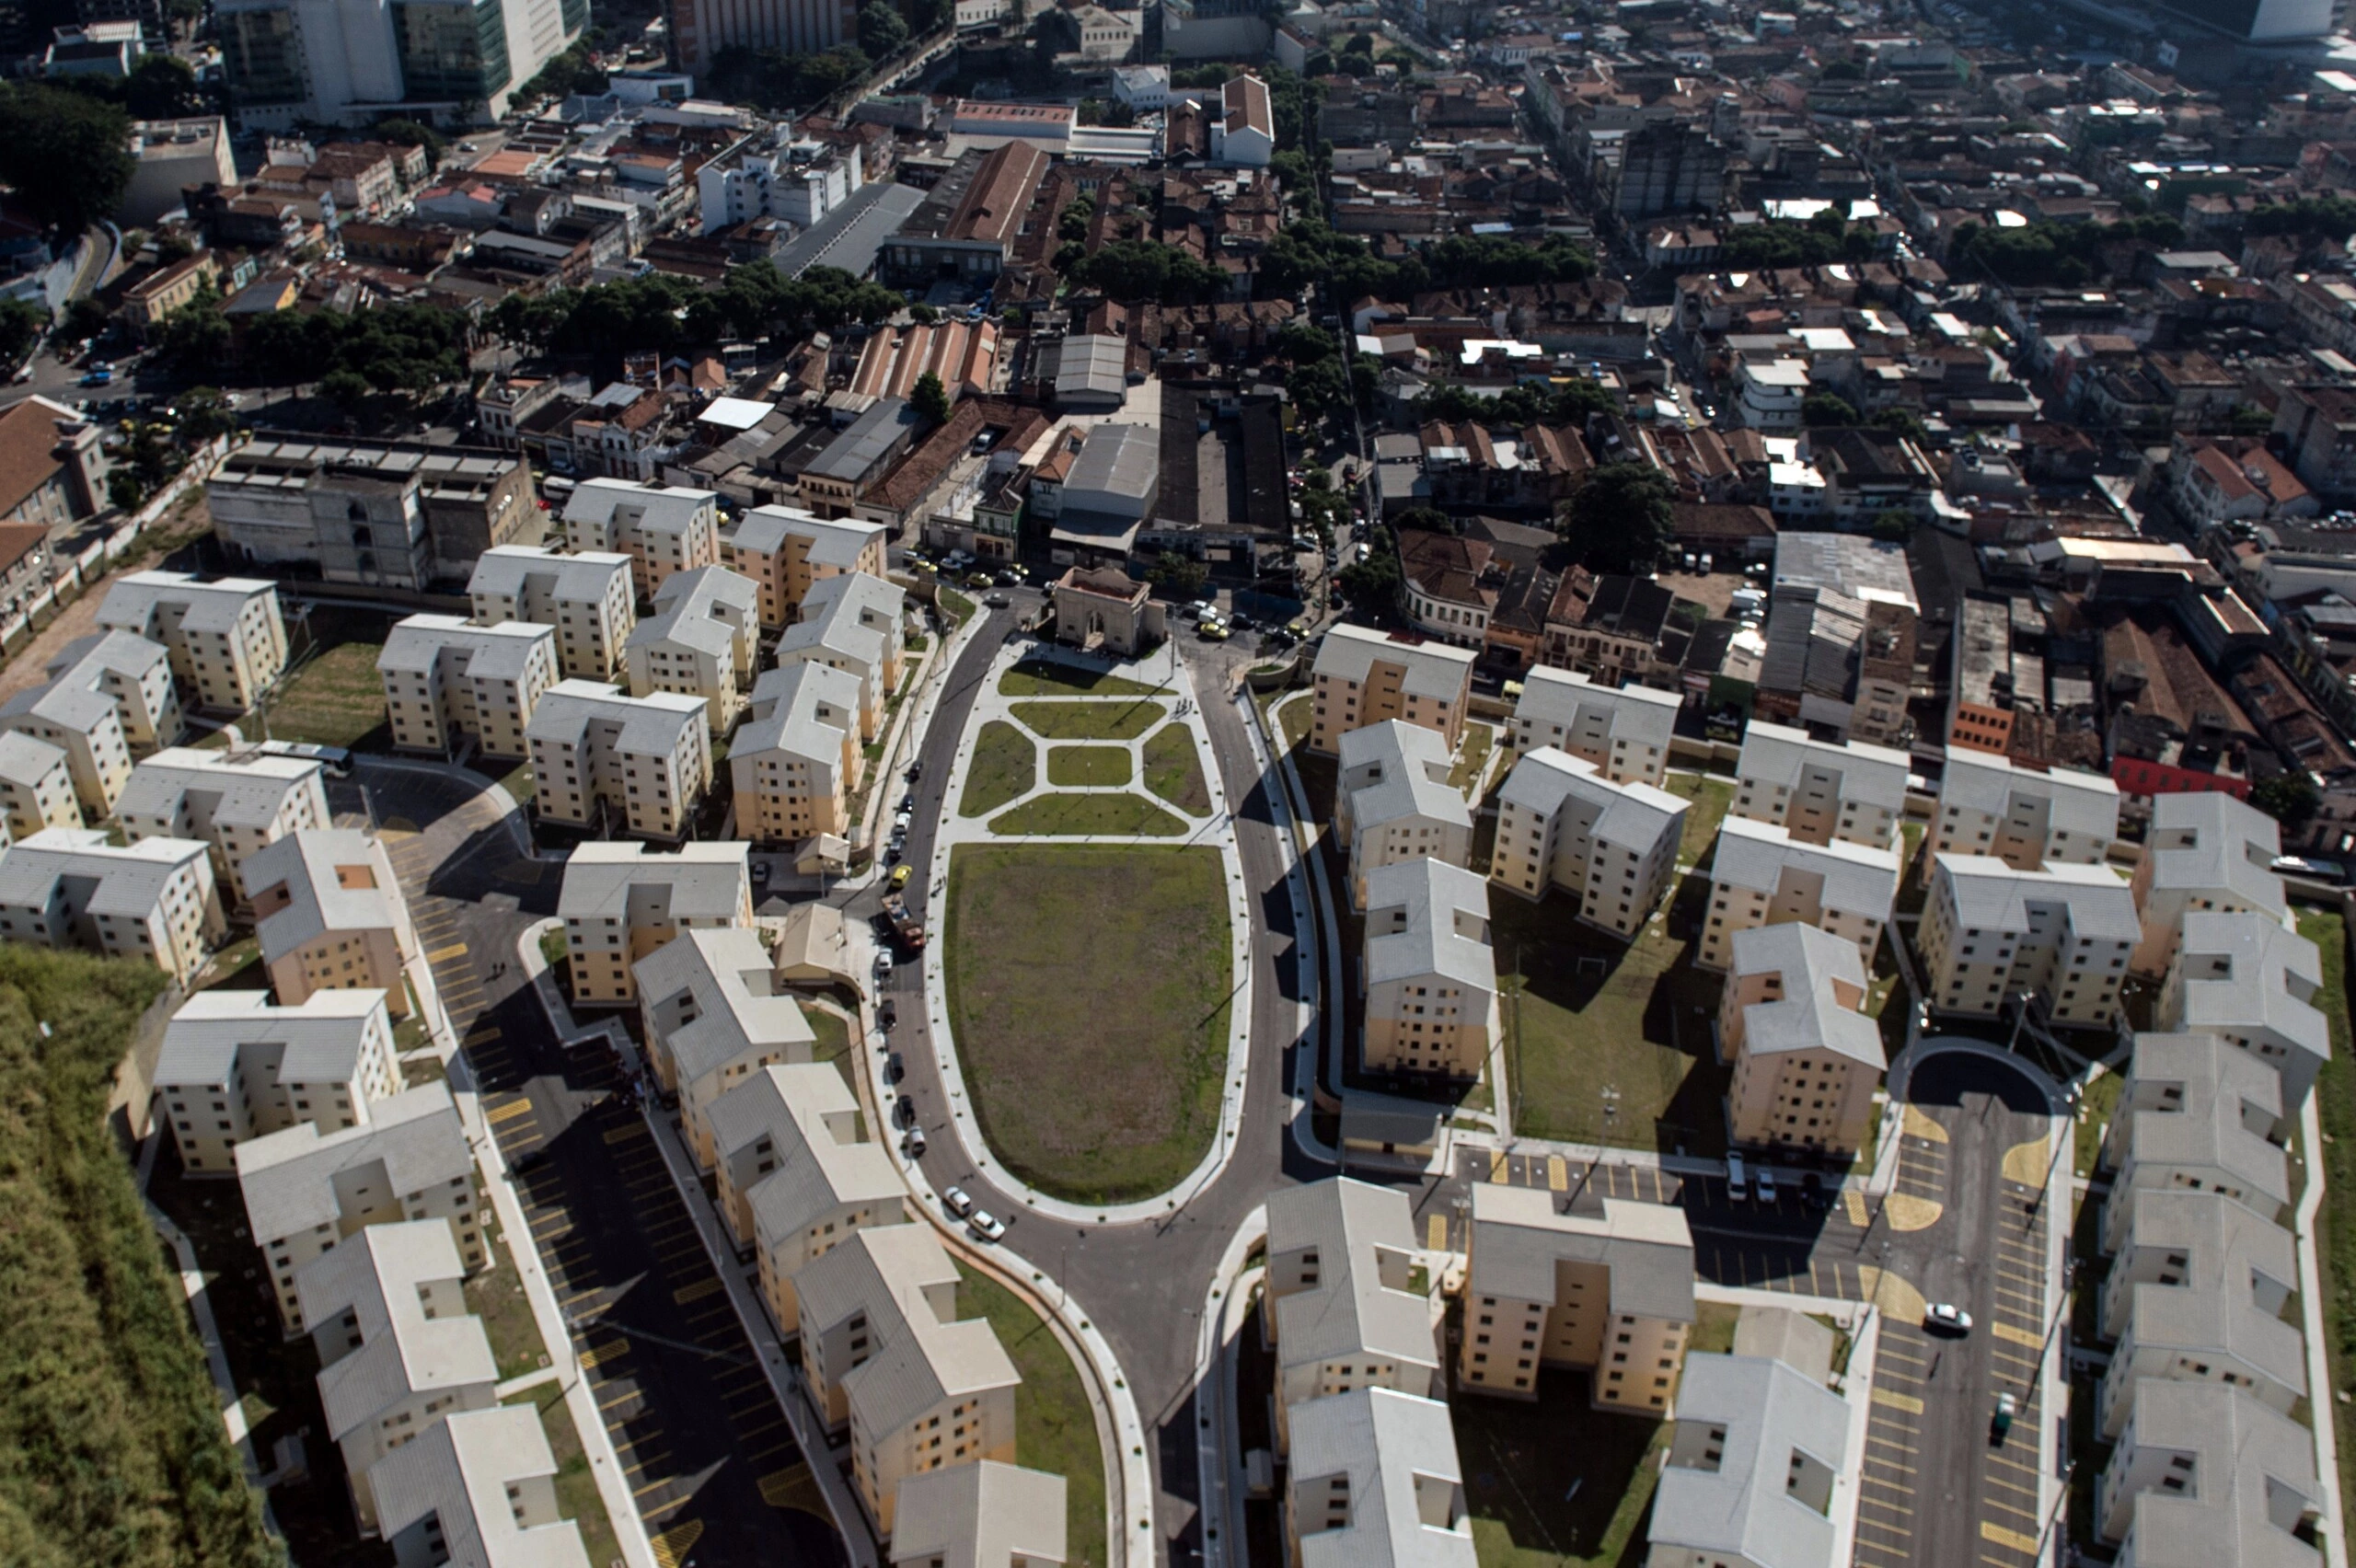 Aerial view of the apartments of the Government social project Minha Casa Minha Vida in Rio de Janeiro, Brazil, on June 28, 2014. AFP PHOTO / YASUYOSHI CHIBA        (Photo credit should read YASUYOSHI CHIBA/AFP/Getty Images)